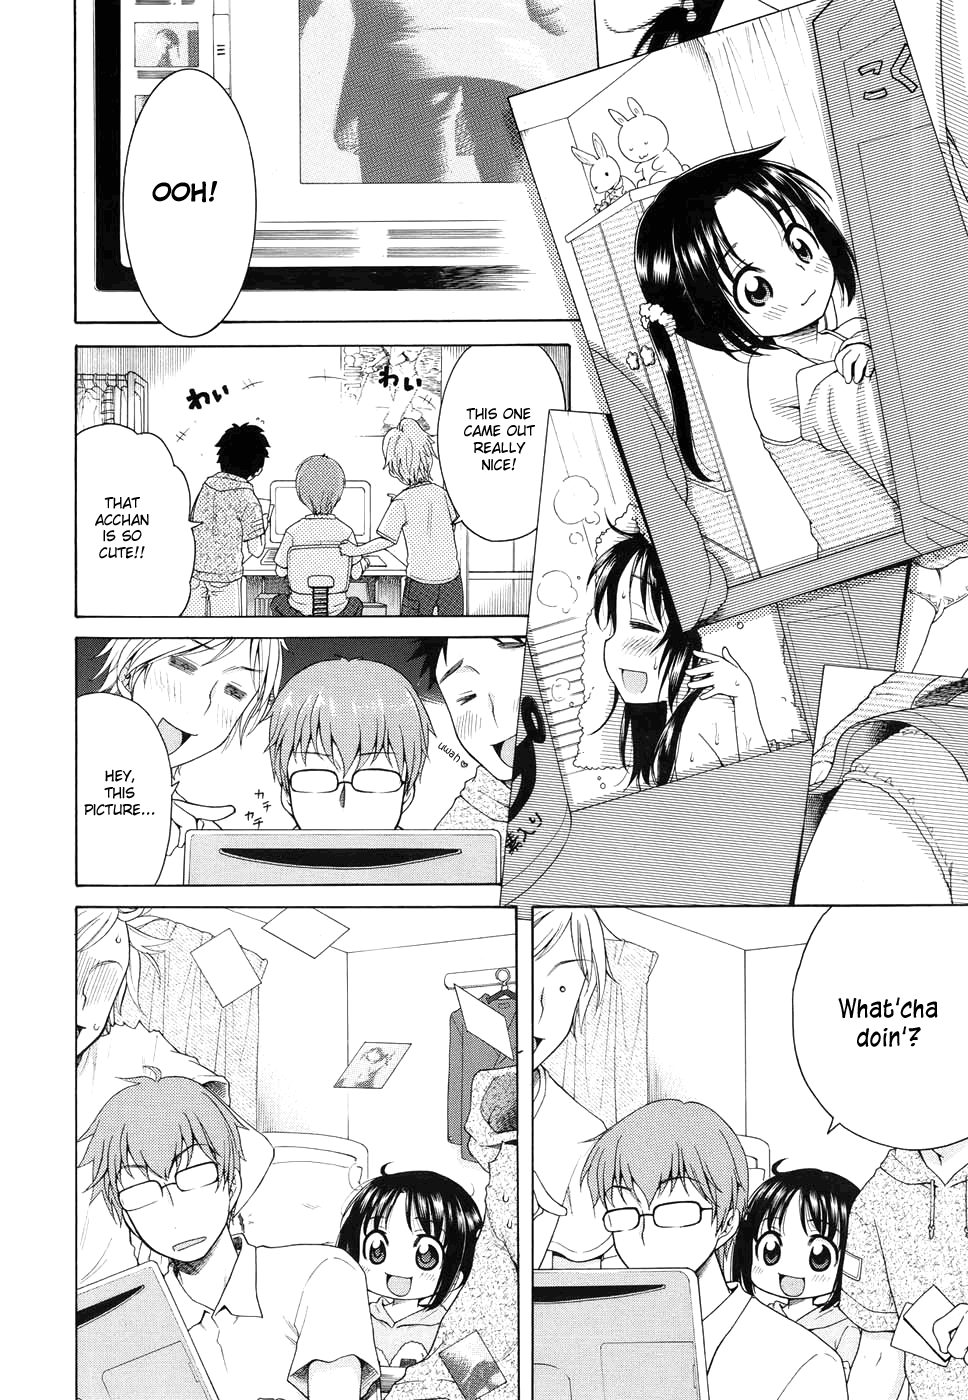 The Light of Tsukimi Manor 1-6 hentai manga picture 6